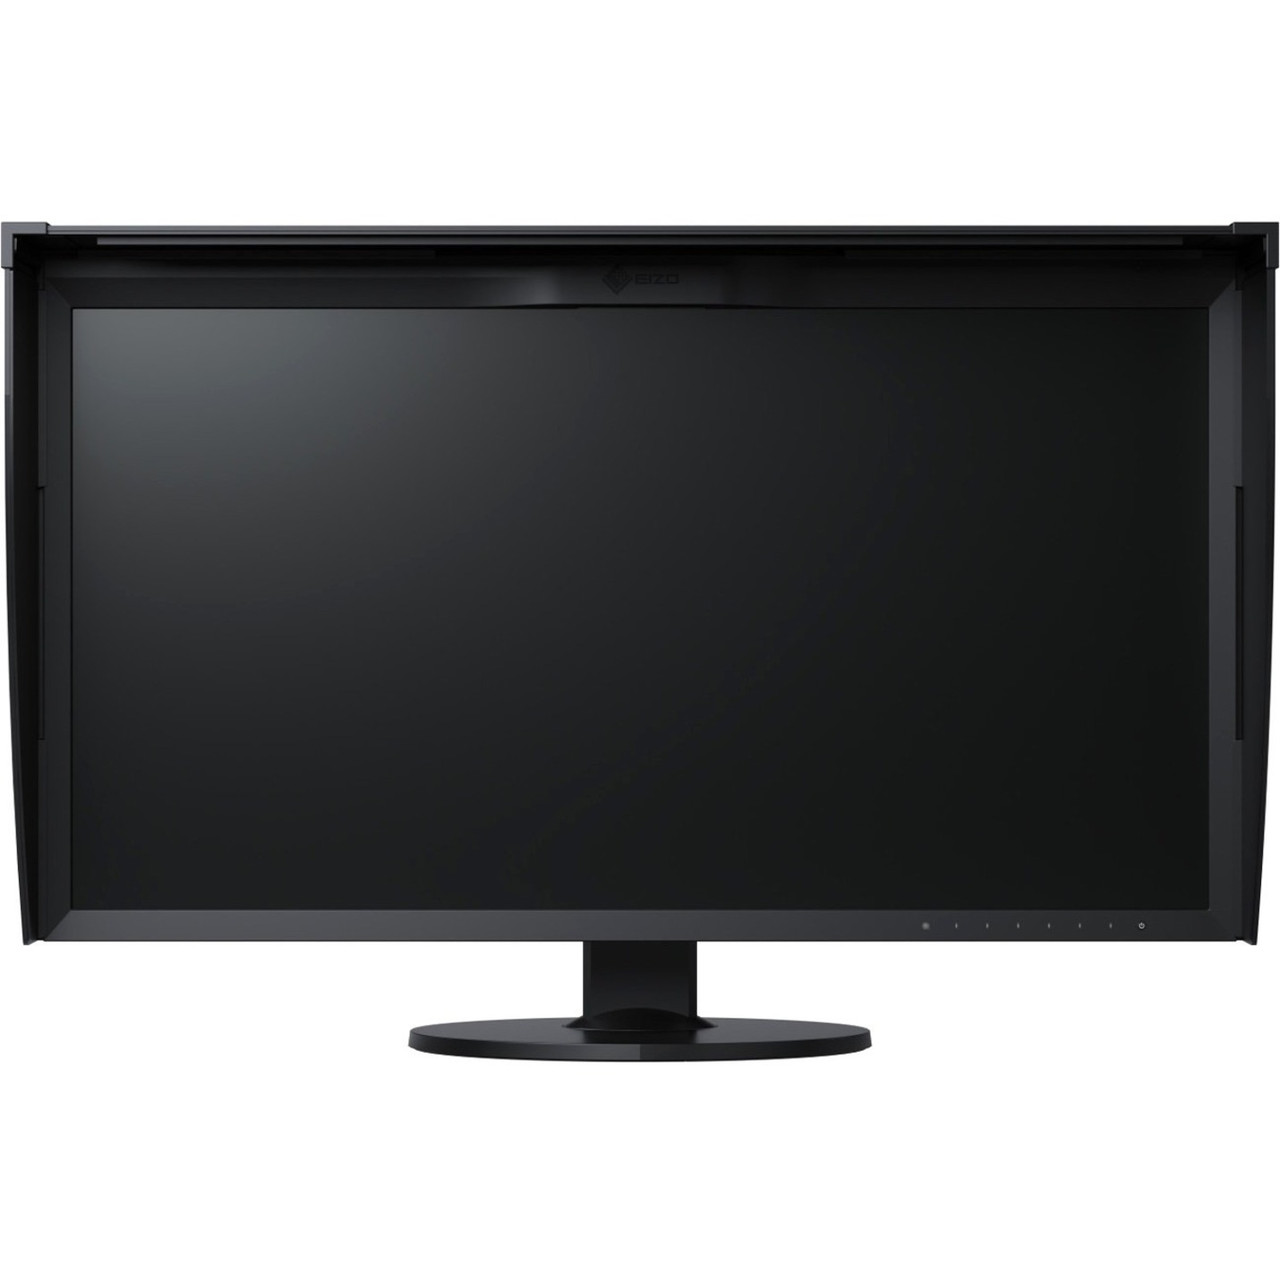 EIZO ColorEdge CG319X 4K LCD Monitor - 17:9 - Black - CG319X-4K-BK